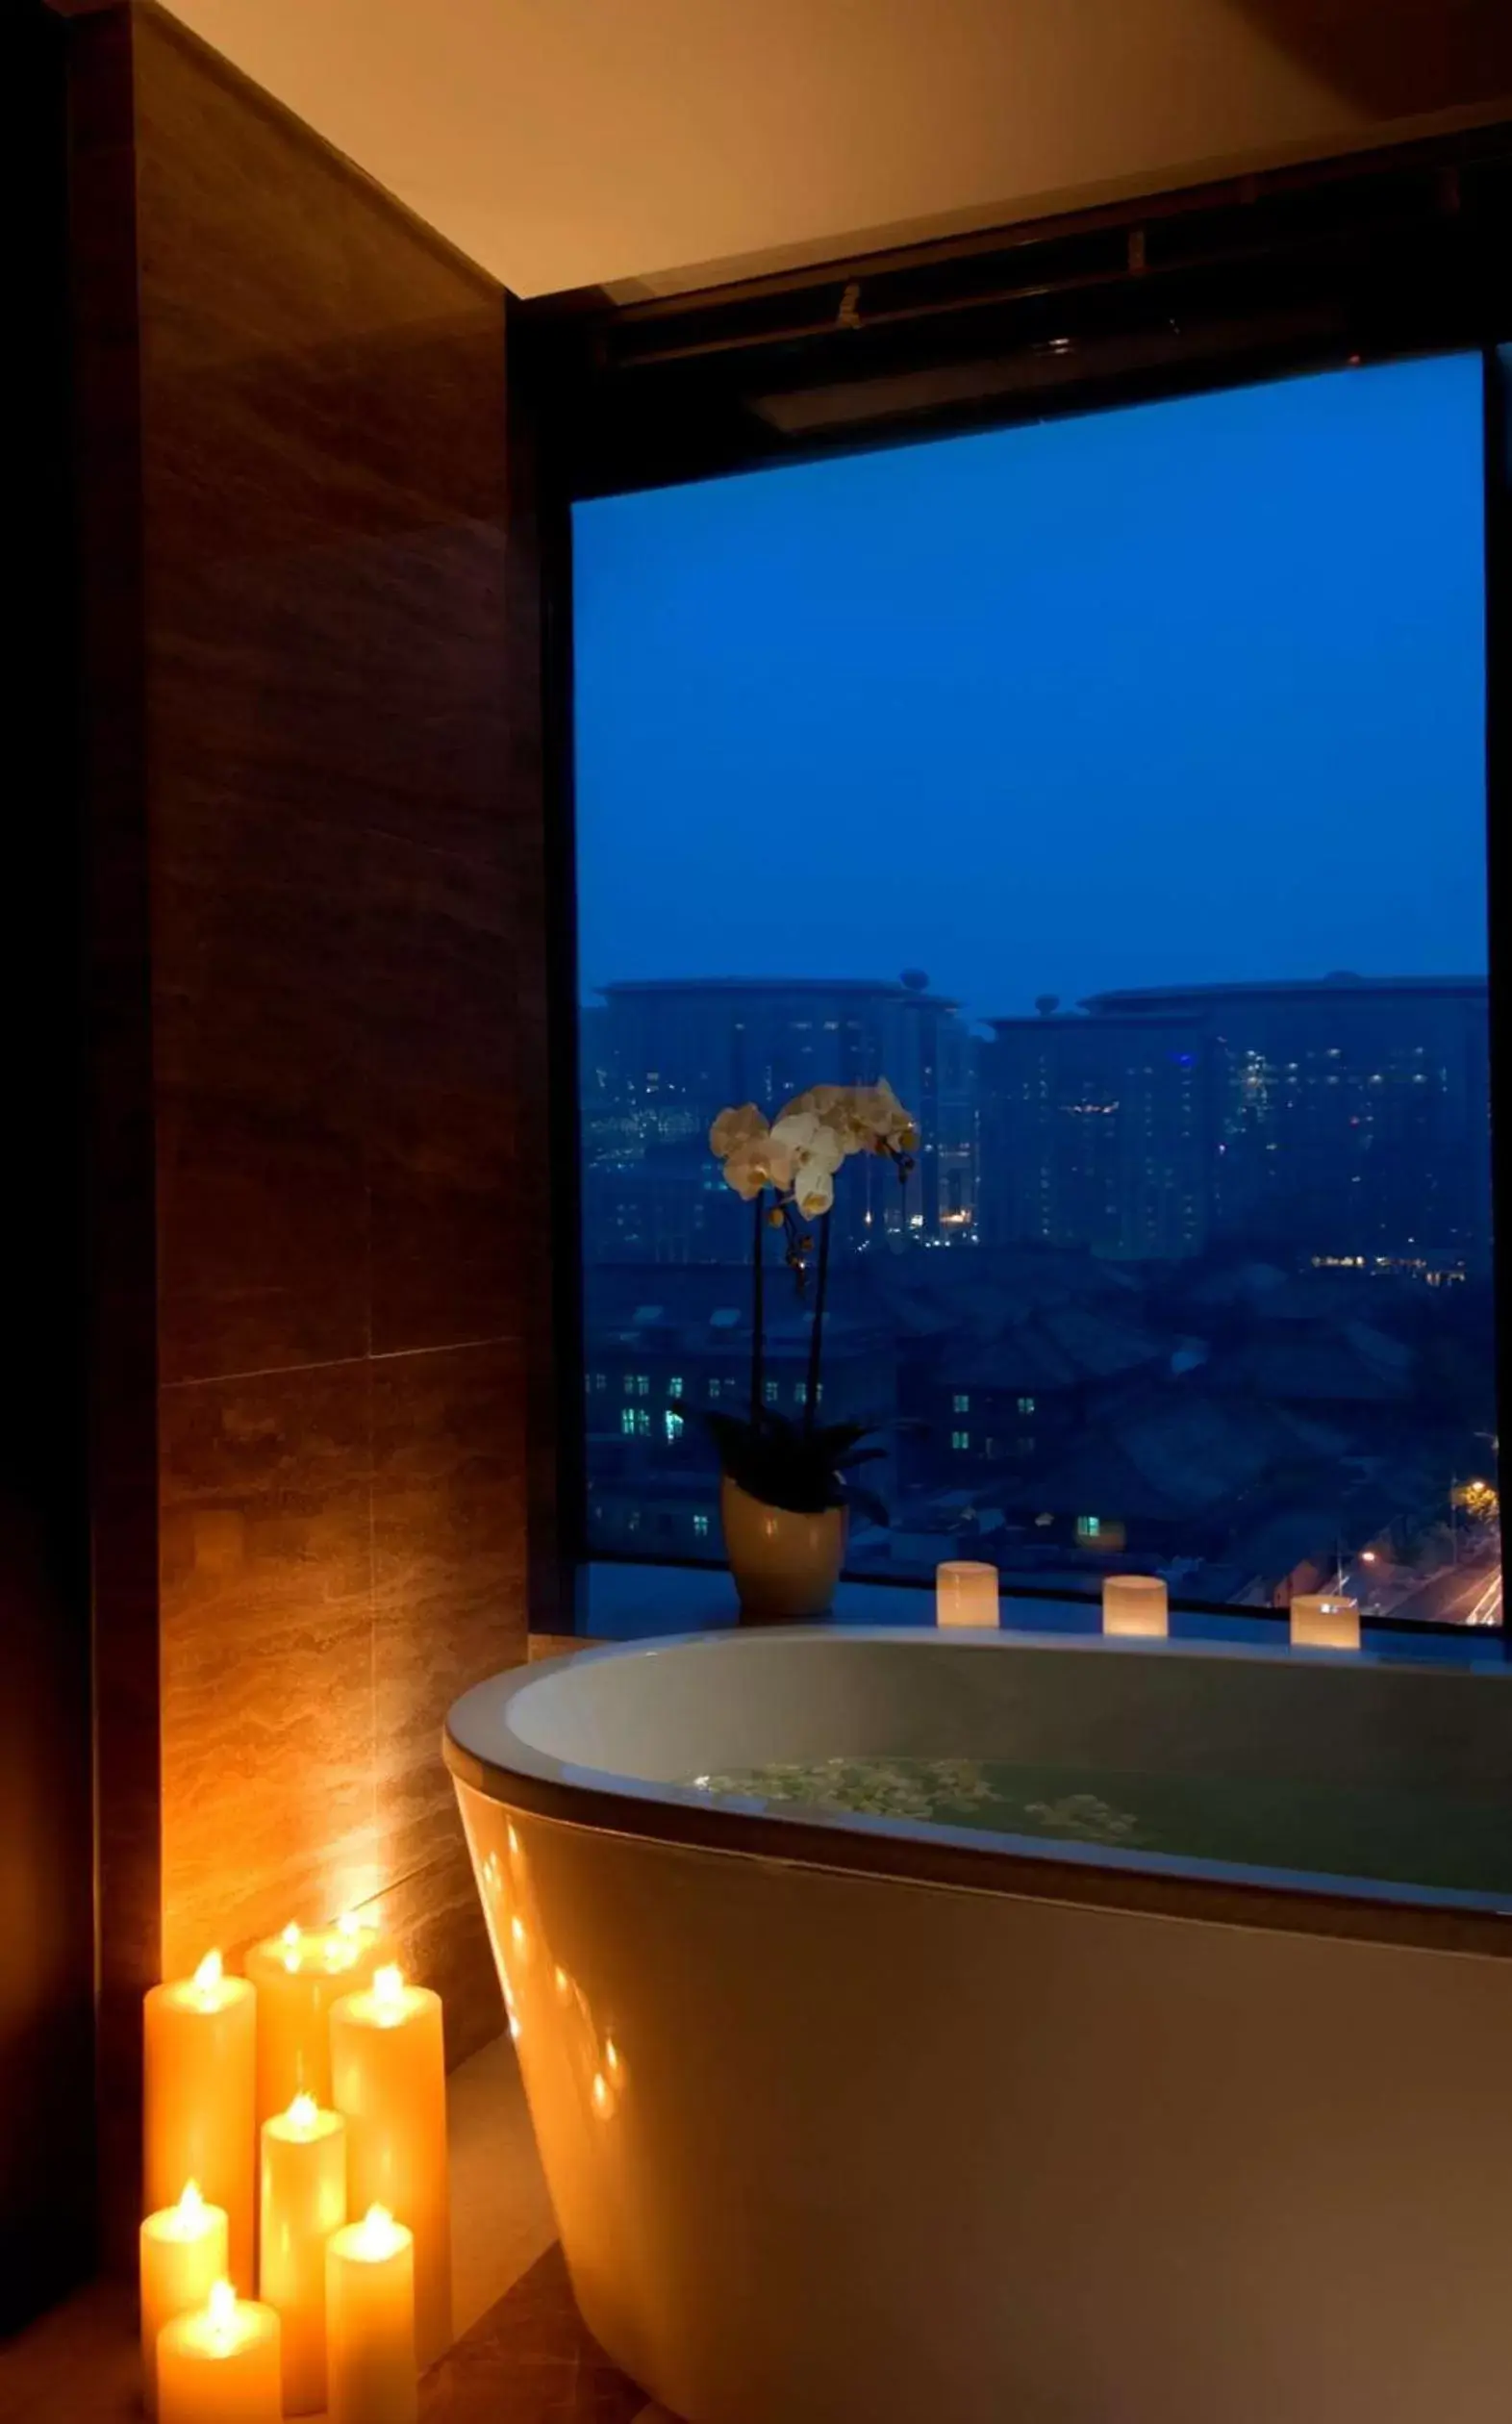 Bathroom in Hilton Beijing Wangfujing